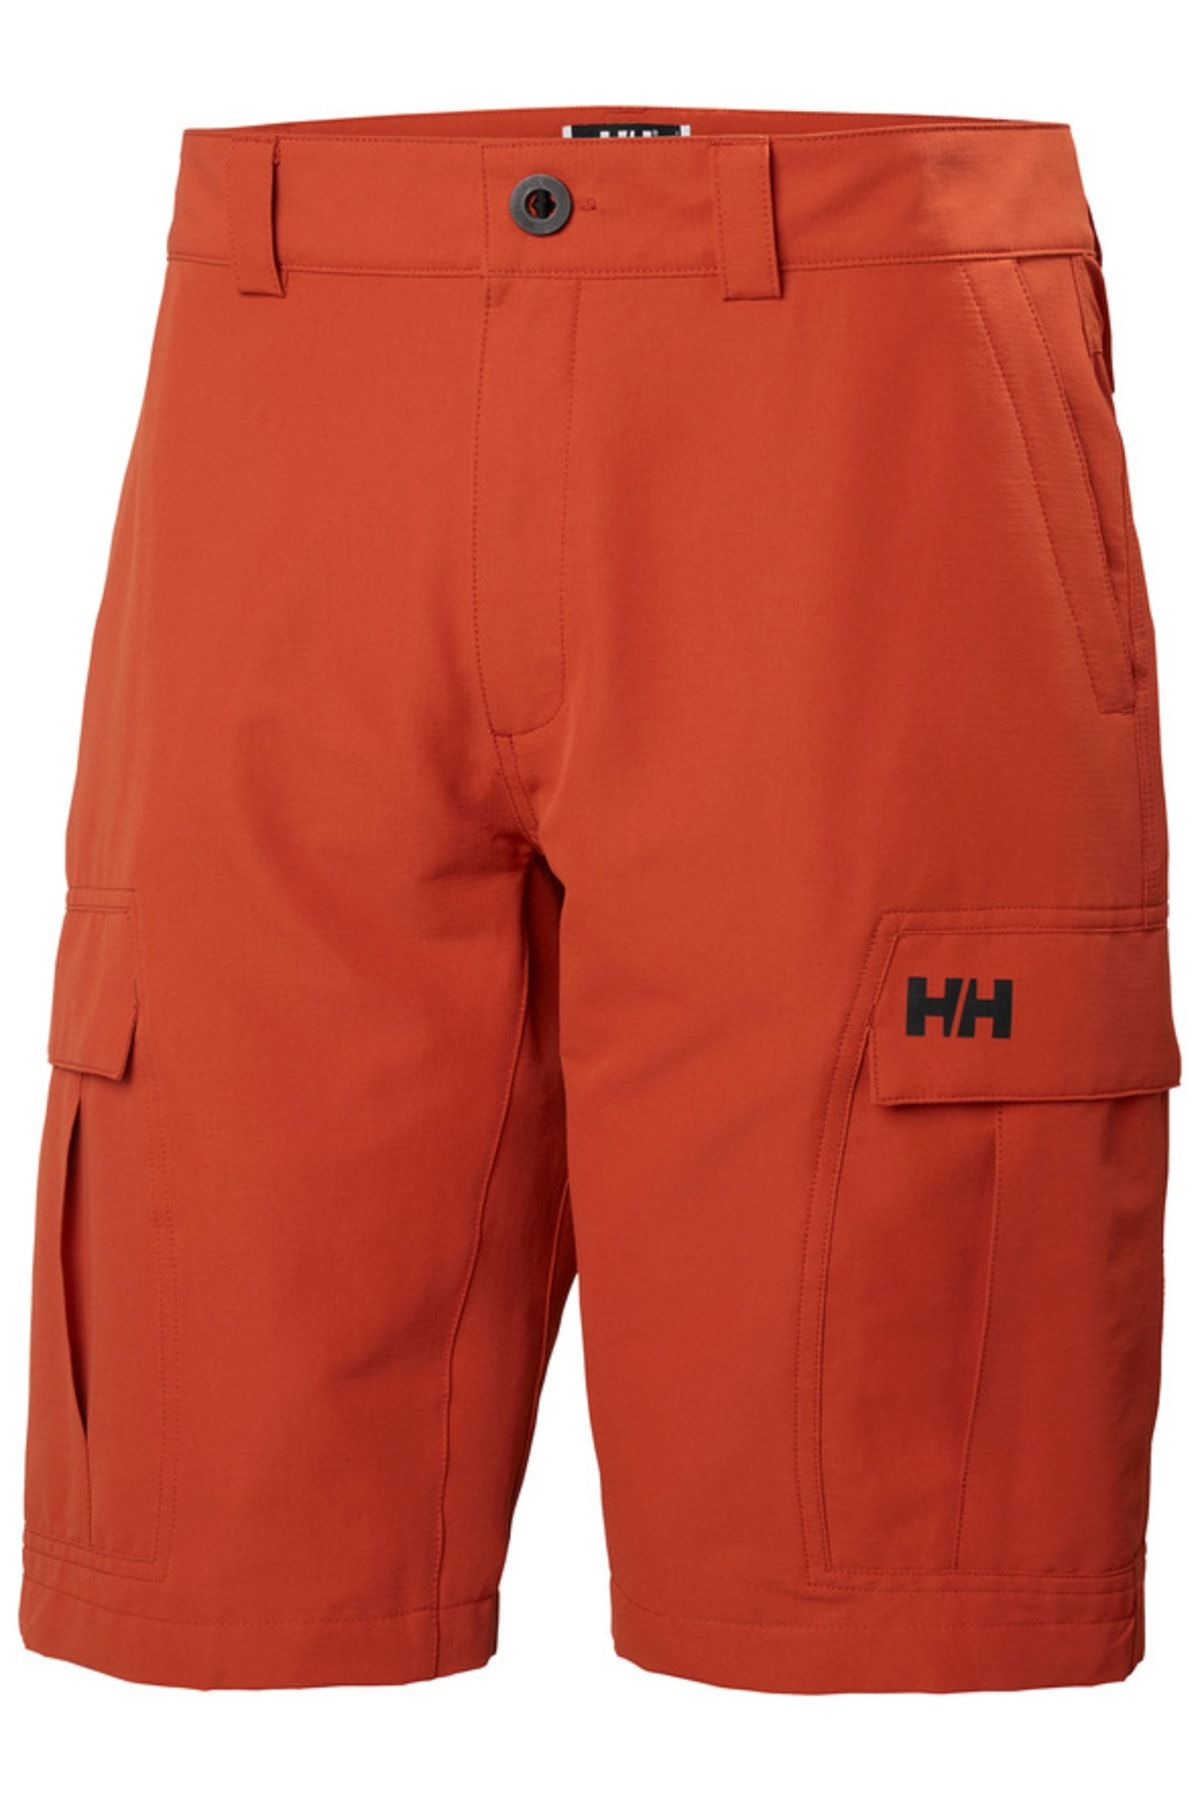 Helly Hansen Hh Qd Cargo Shorts 11 - Erkek Şort